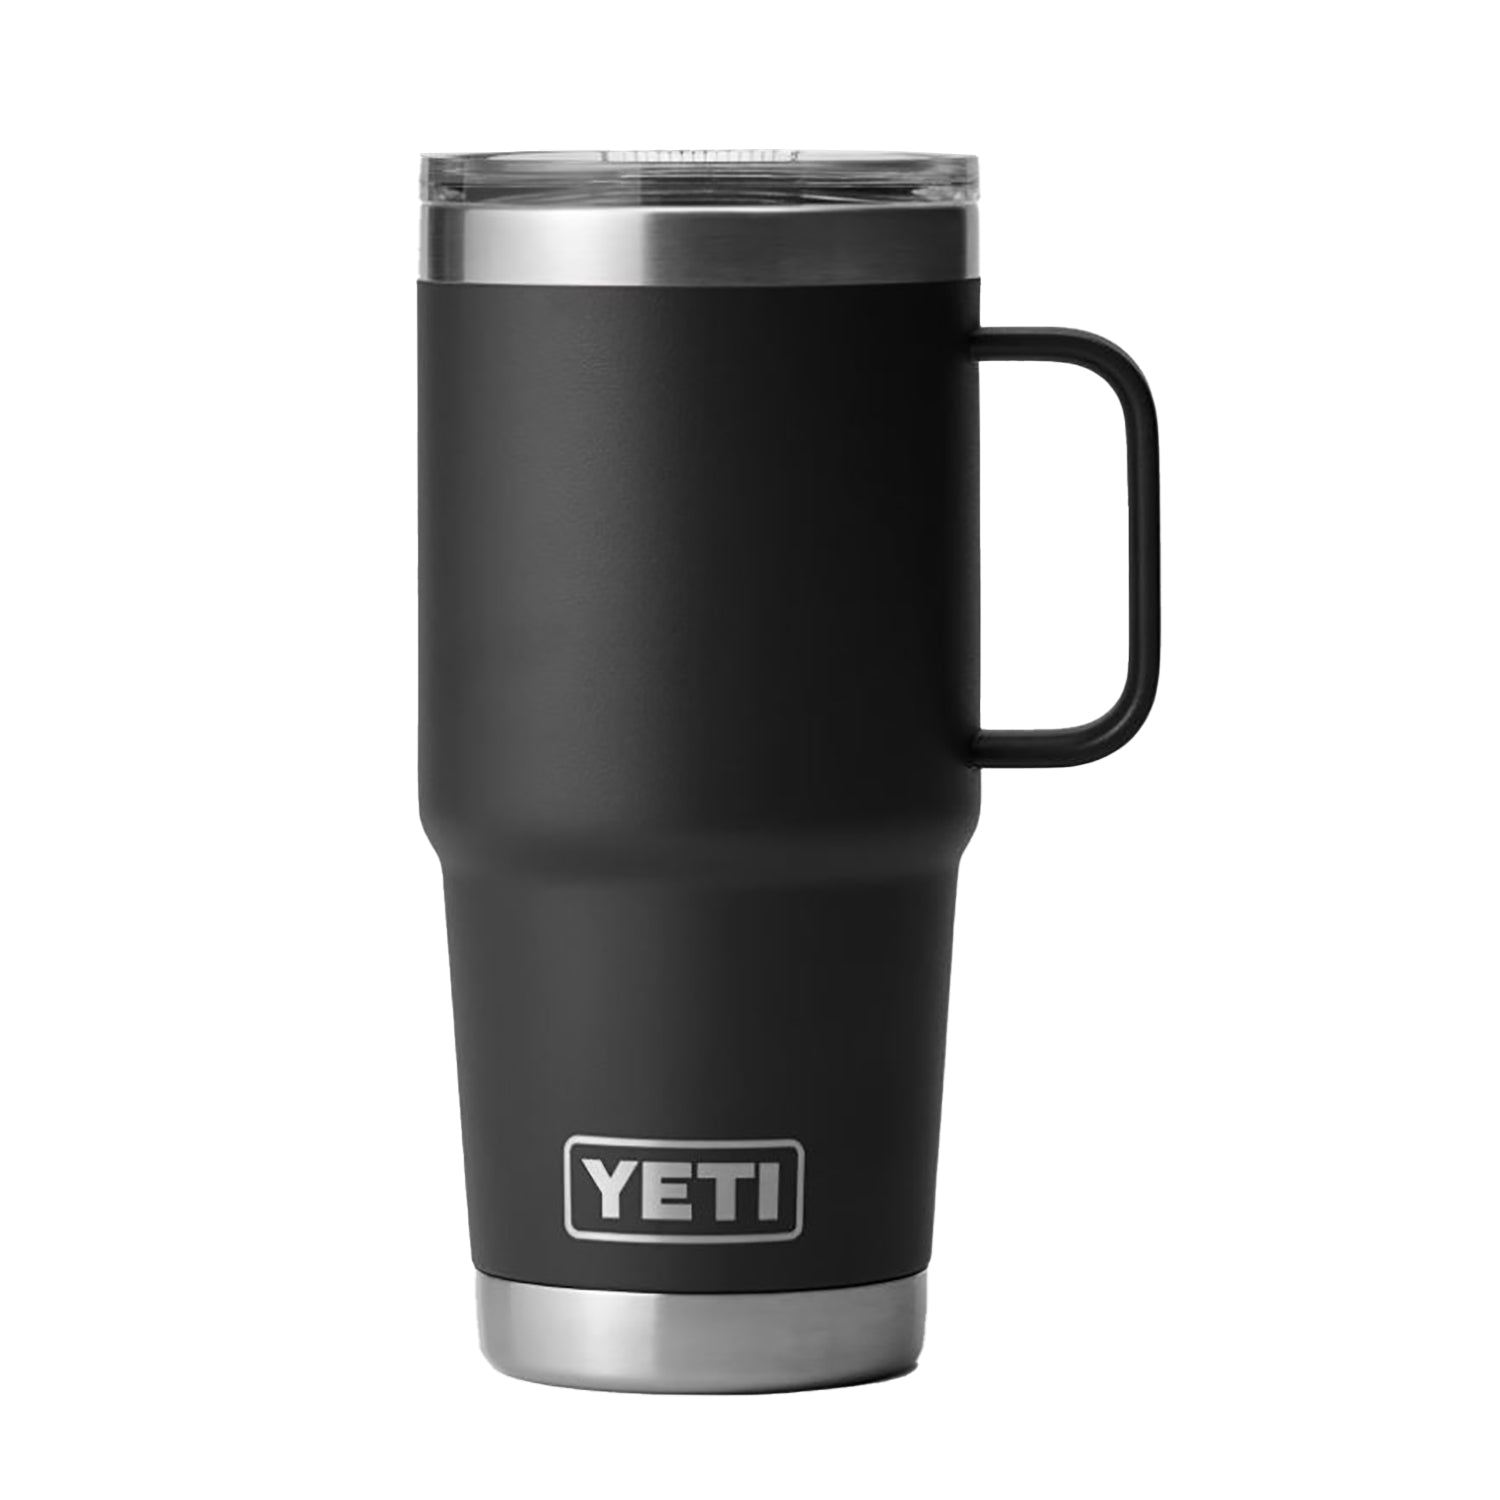 Wotermly Tumbler Handle 20 oz for Yeti Ramblers,Yeti Handle Yeti cup  holder, Anti Slip Travel Mug Gr…See more Wotermly Tumbler Handle 20 oz for  Yeti